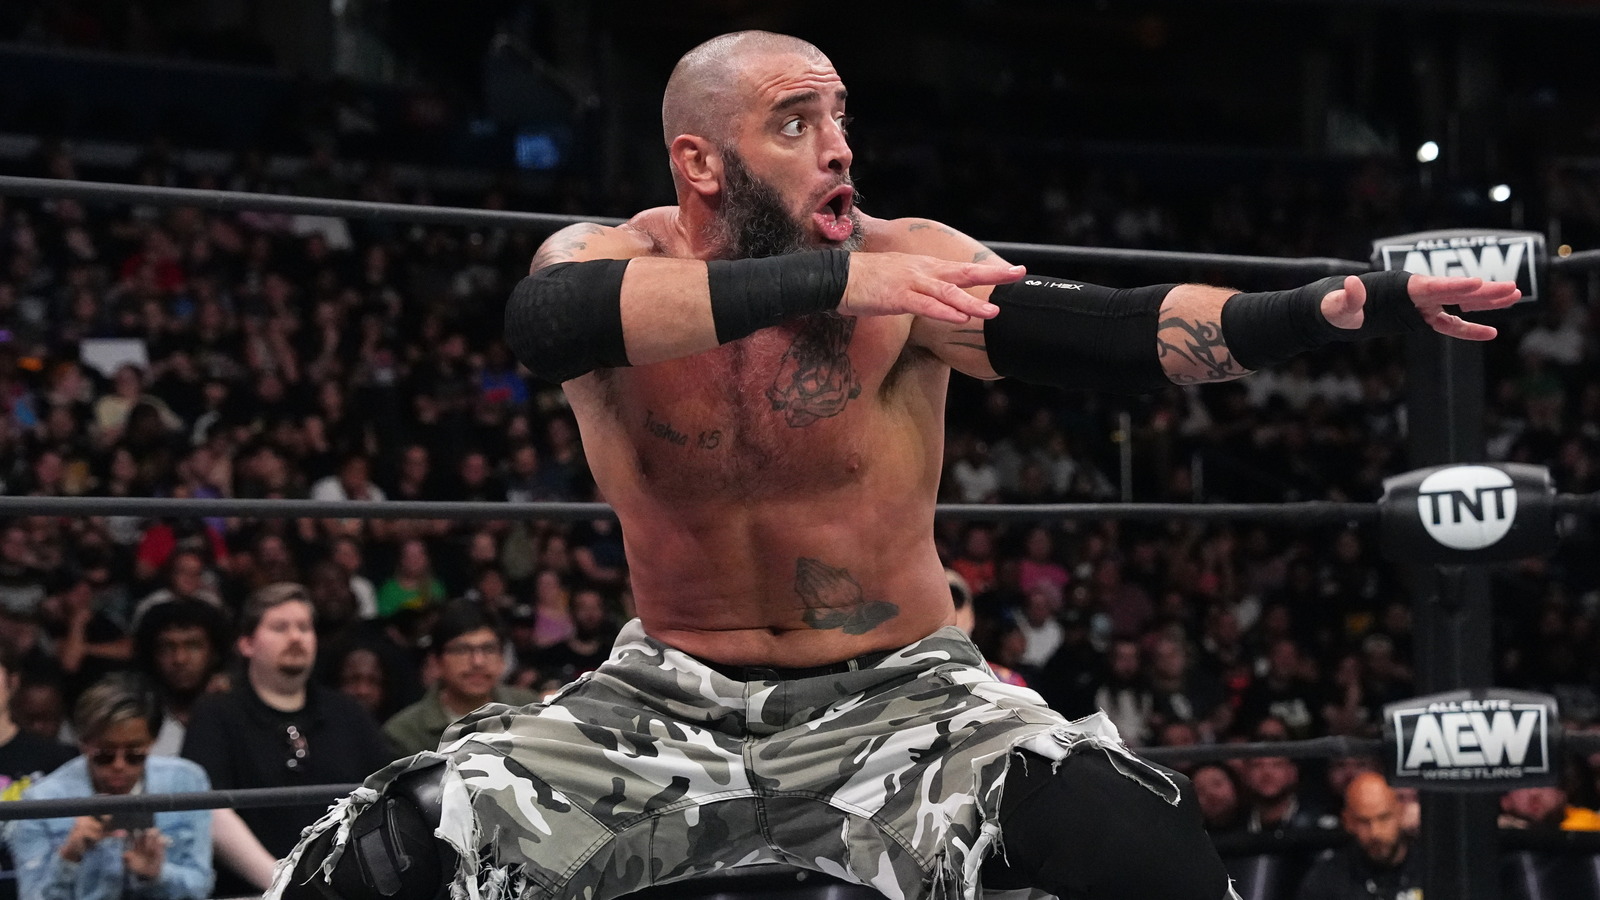 Detalles tras bambalinas sobre la lesión que obligó a Mark Briscoe a abandonar ROH Death Before Dishonor